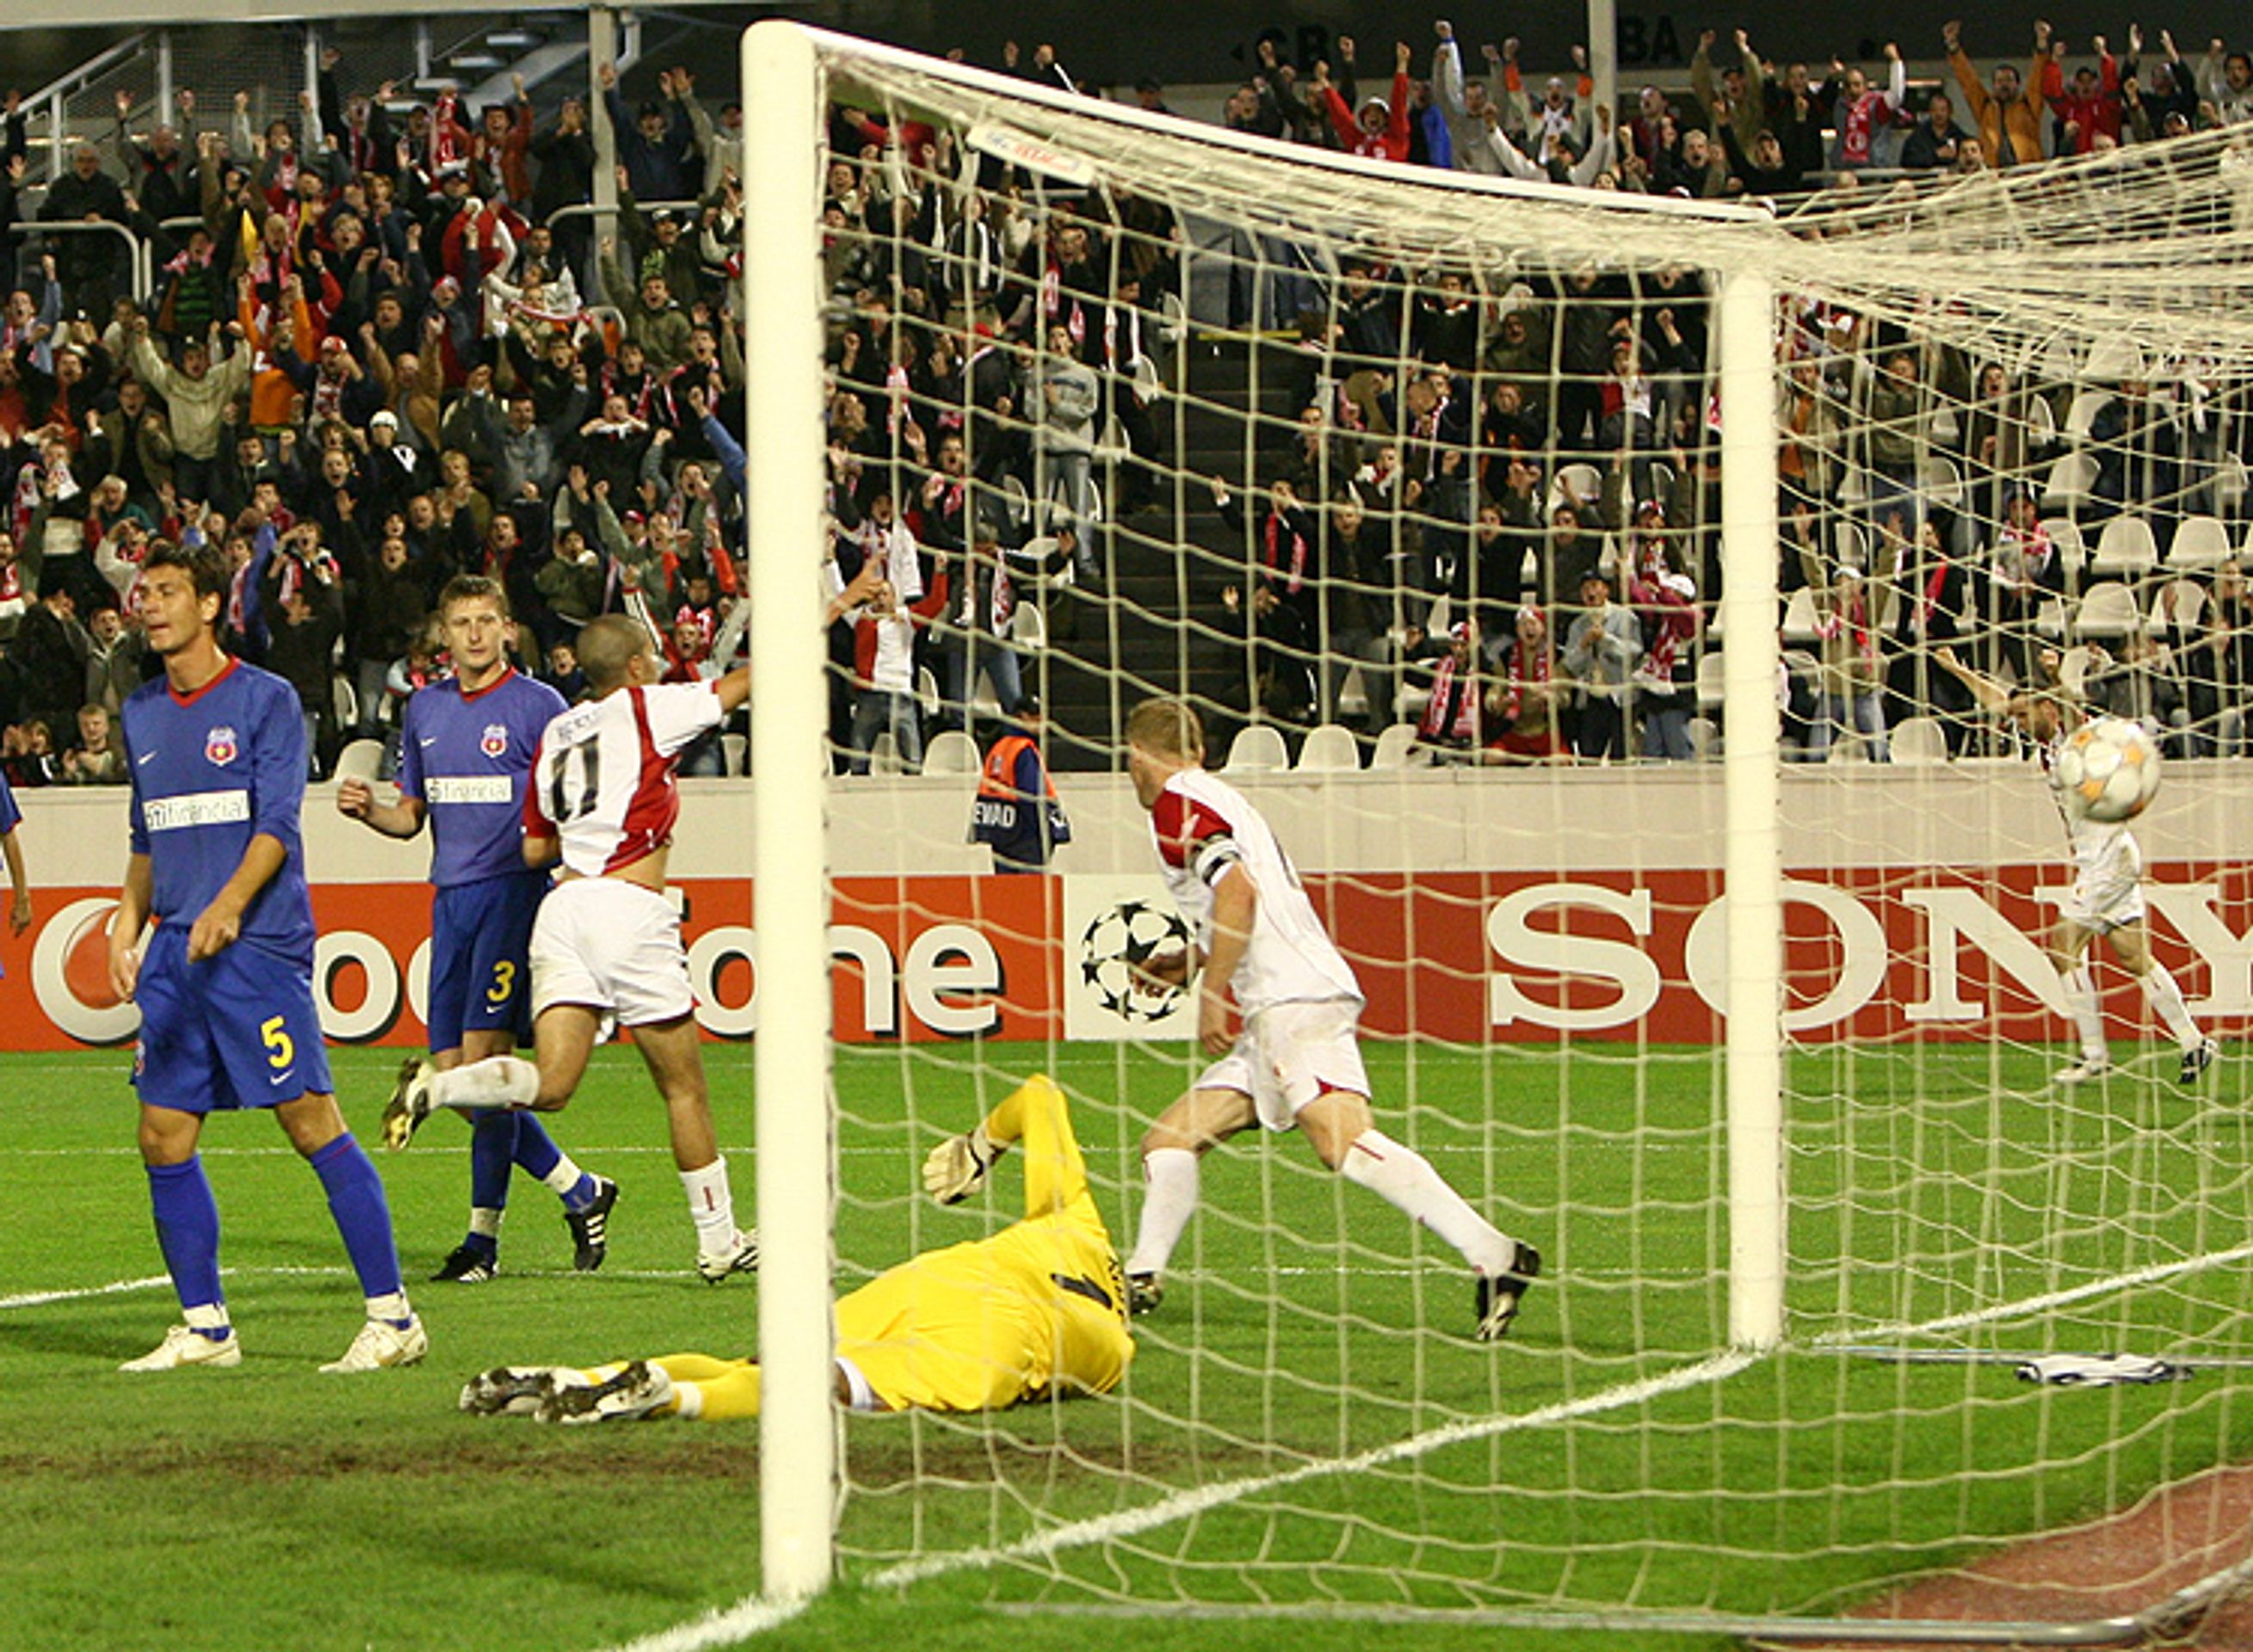 Tento gól Francouze Belaida rozhodl o tom, že Slavia porazila v Lize mistrů Steau Bukurešť 2:1. - Slavia má za sebou úvod snů, Ligu mistrů zahájila výhrou (8/12)